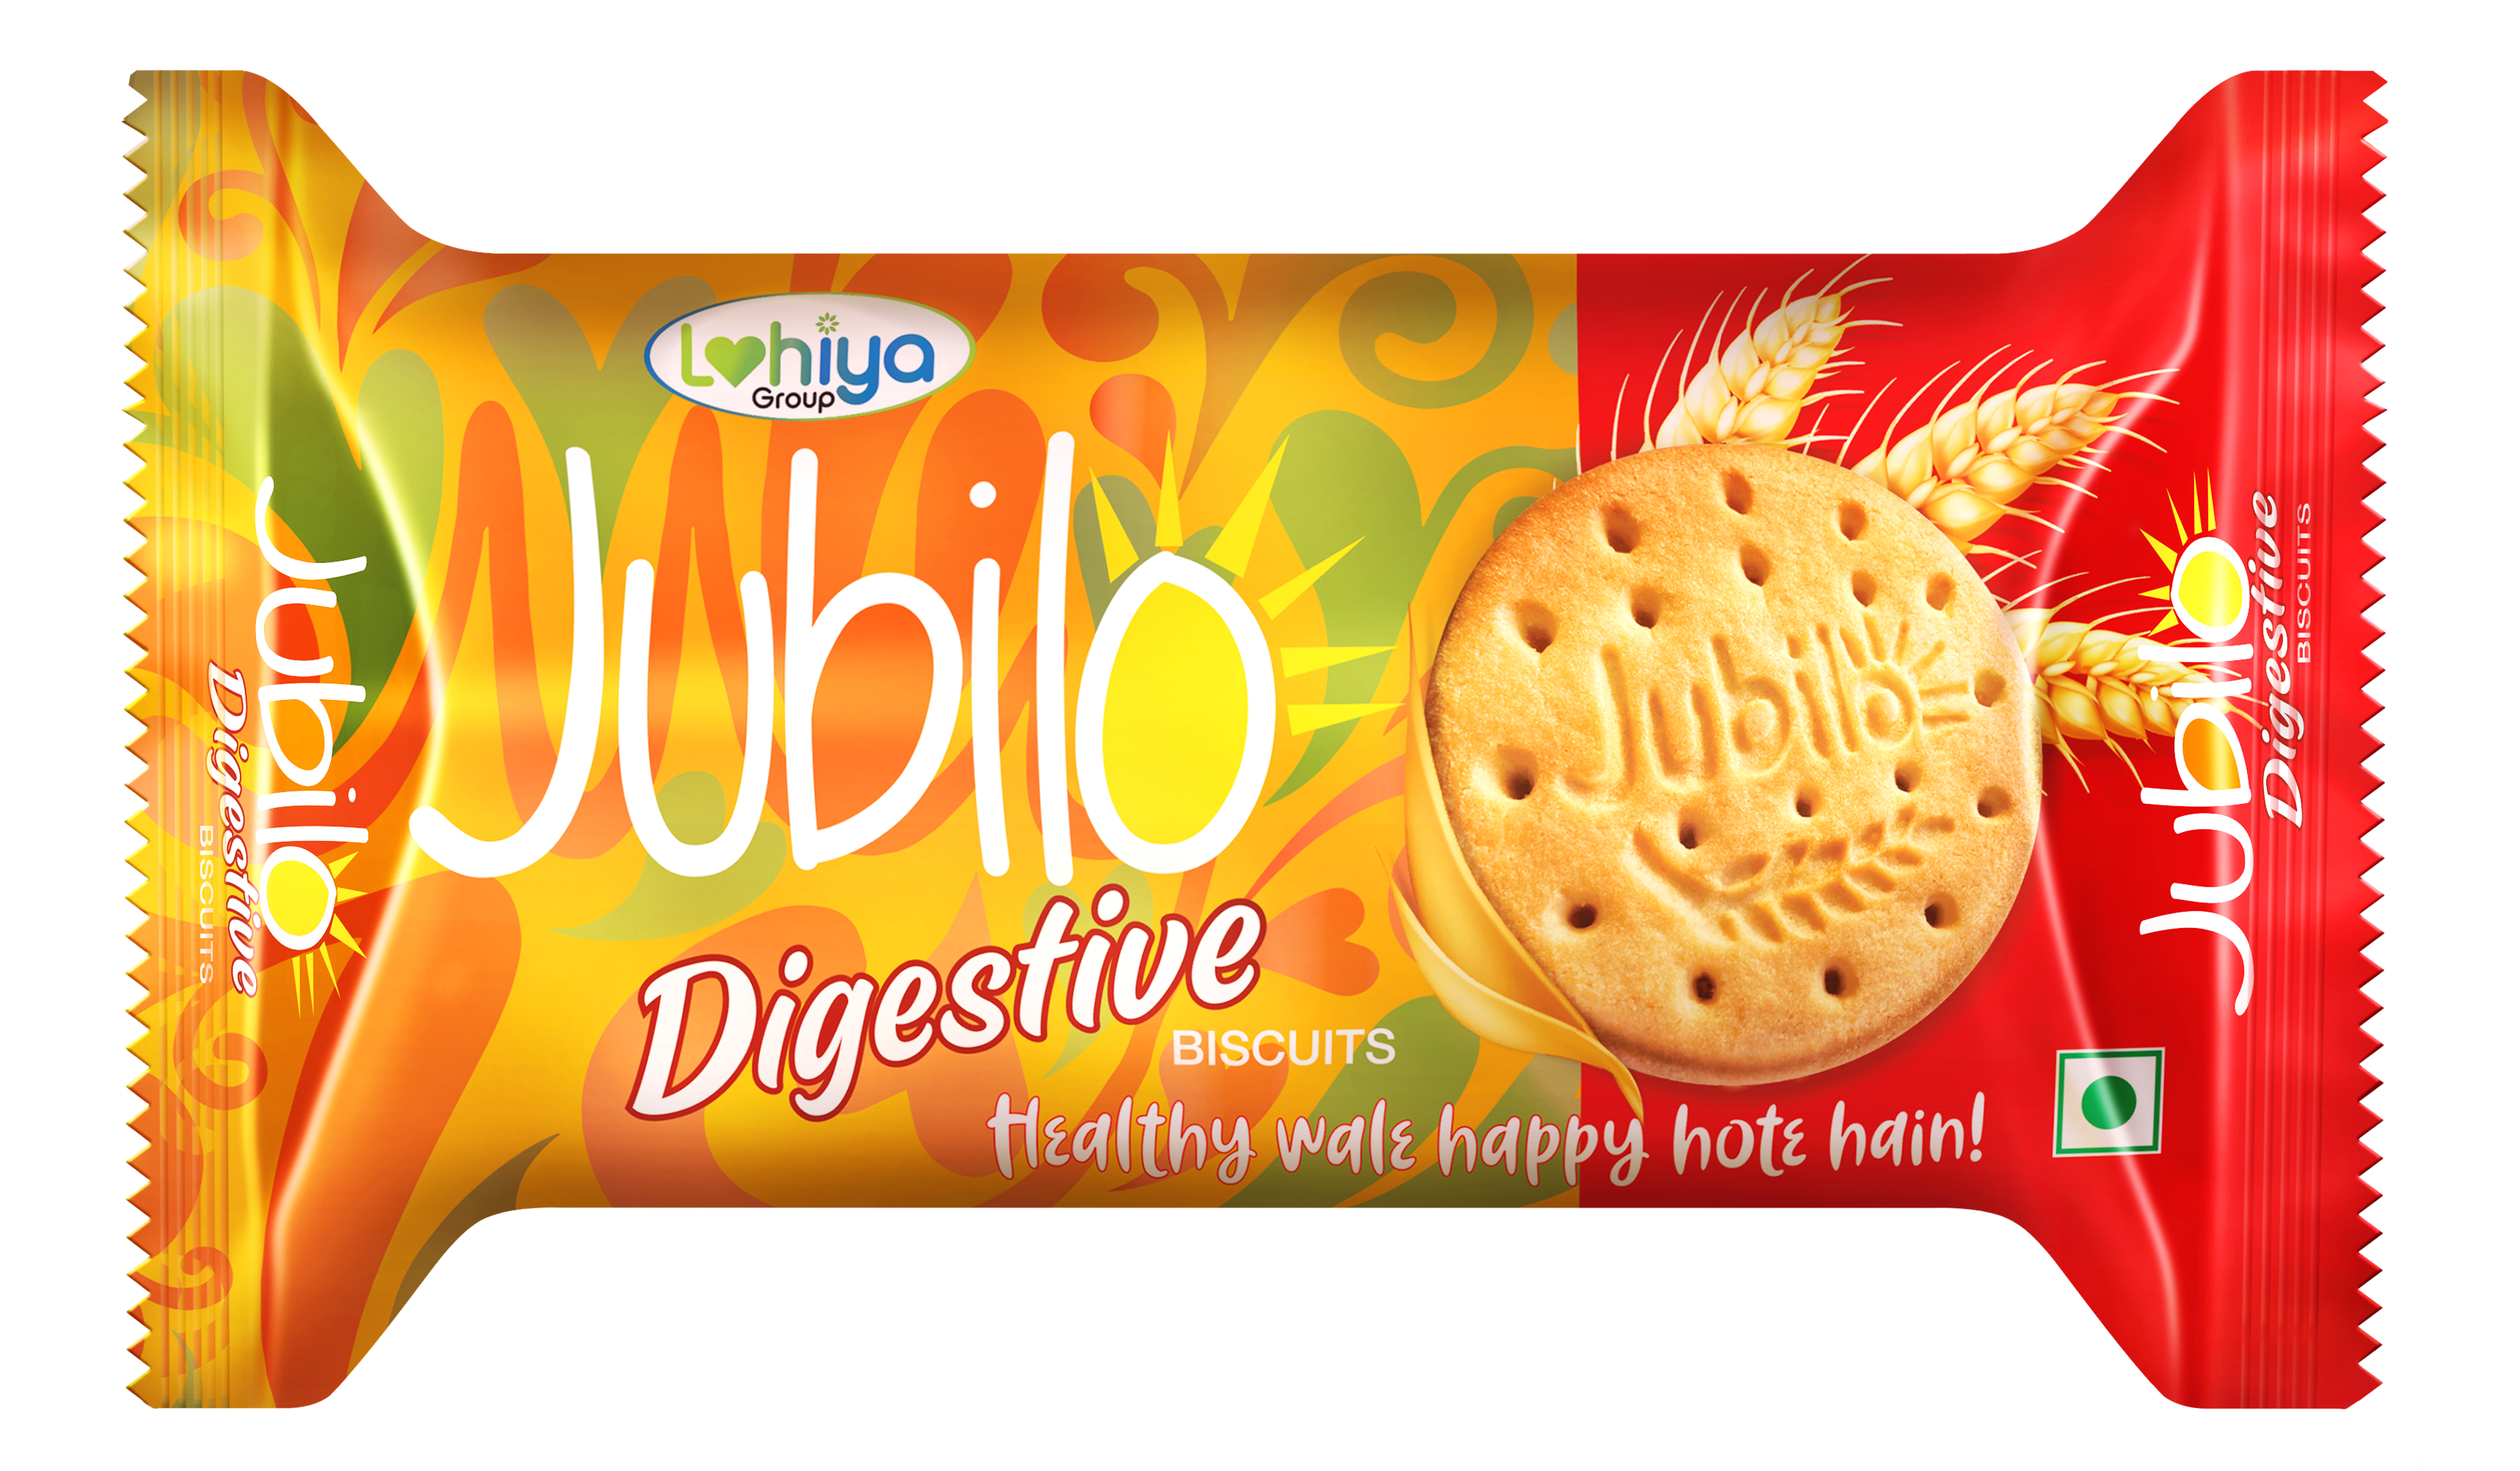 Jubilo Digestive